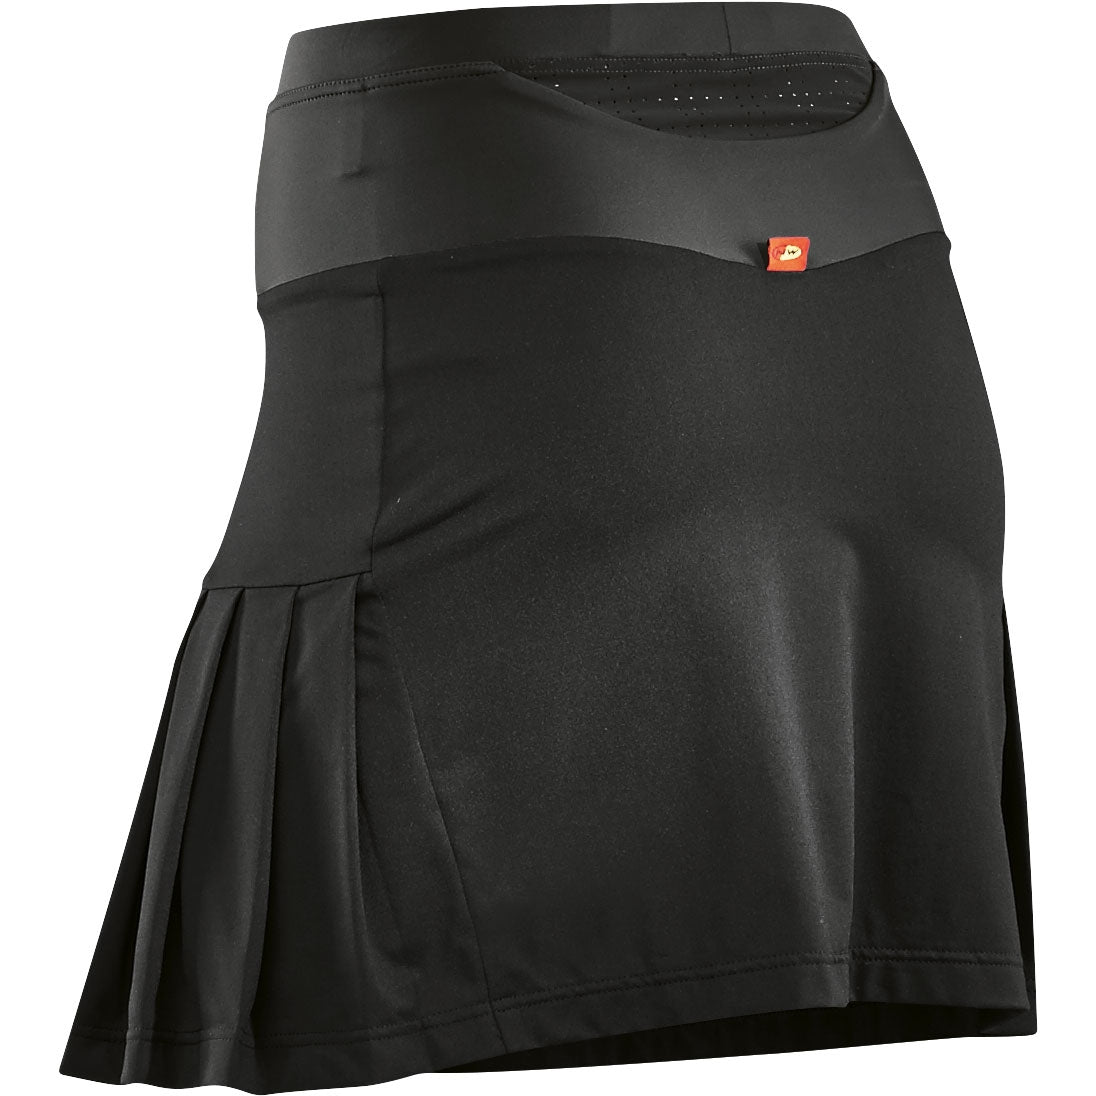 Northwave Crystal 2 Skirt (Black)